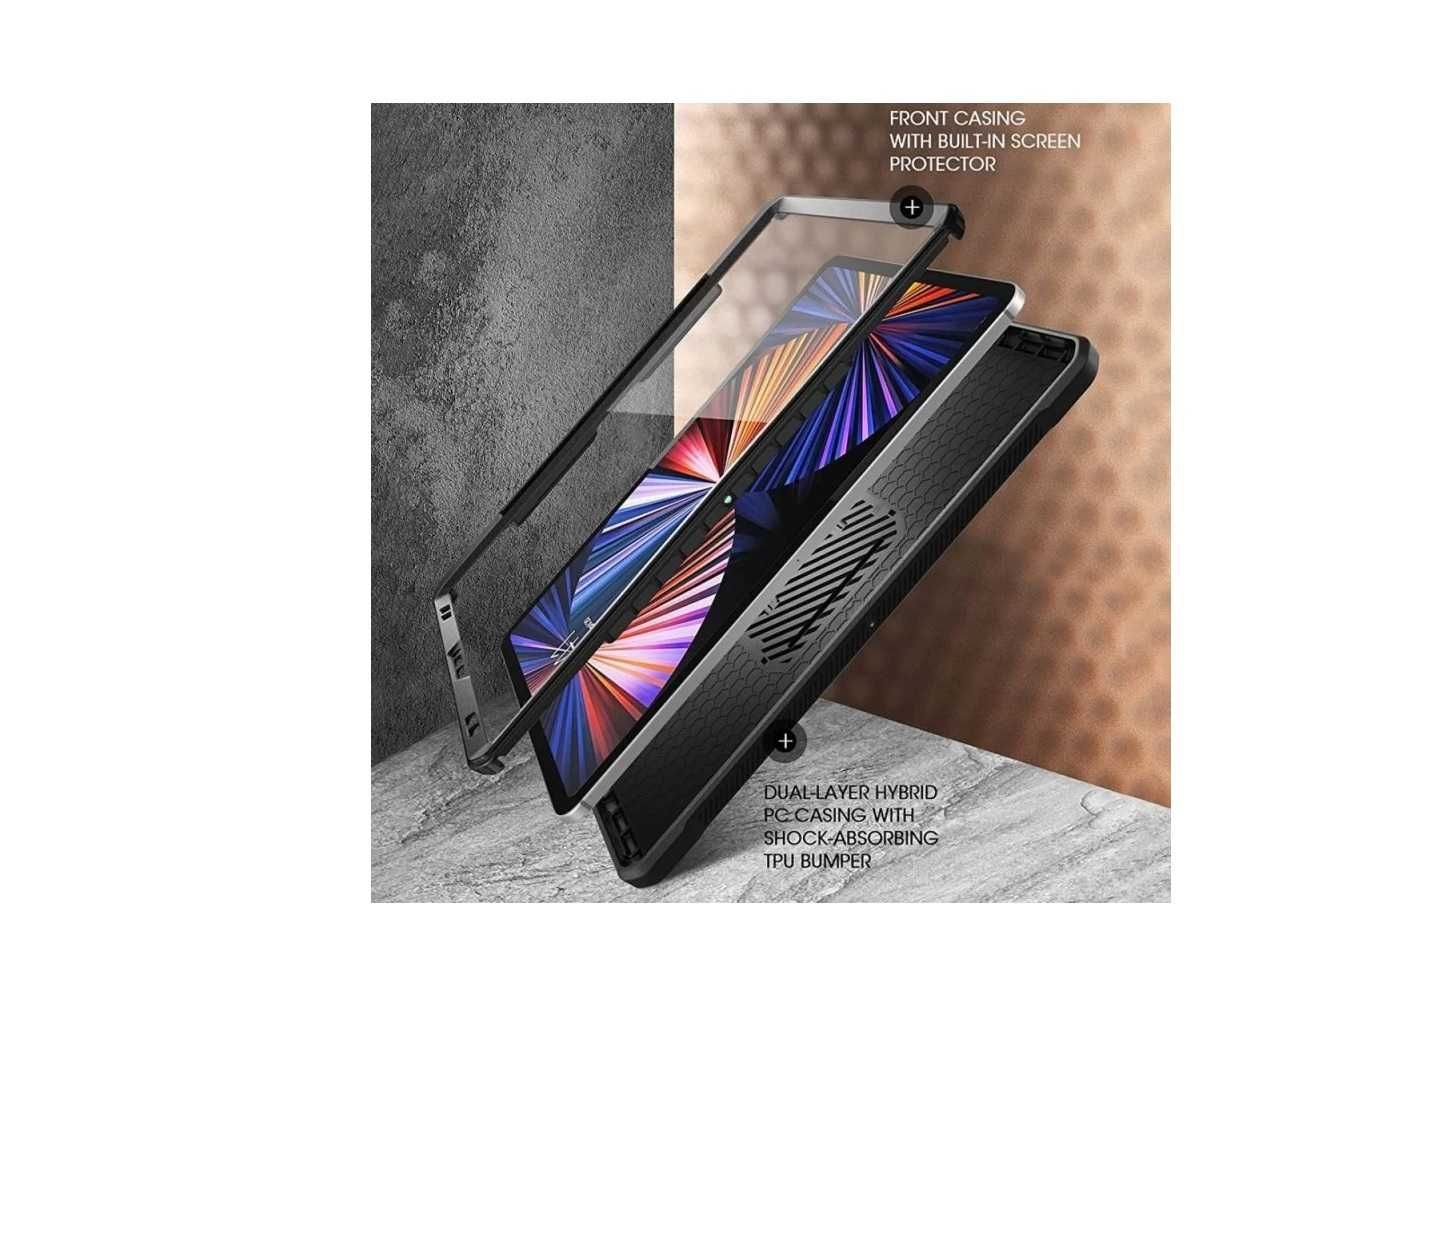 Huse premium APPLE iPad PRO 12.9 inch 2022 2021 2020 modele culori dif